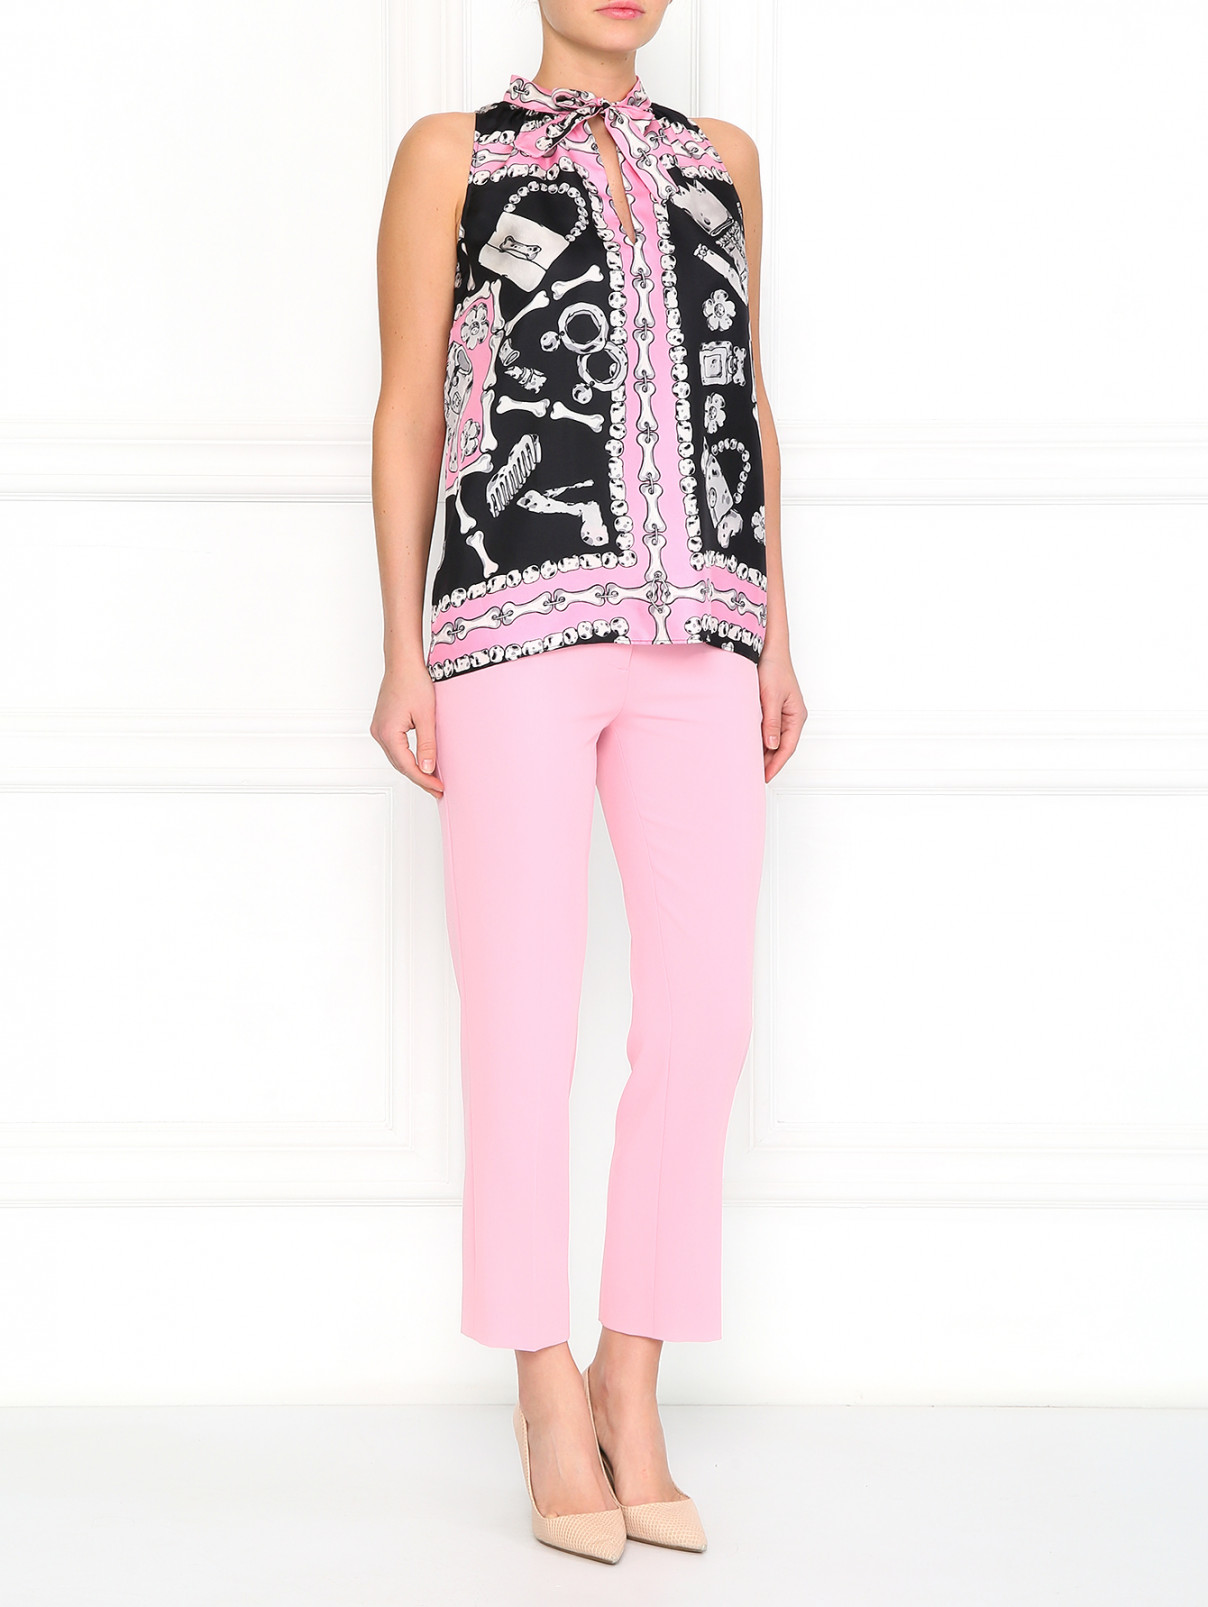 Блуза из шелка с узорами Moschino Cheap&Chic  –  Модель Общий вид  – Цвет:  Розовый